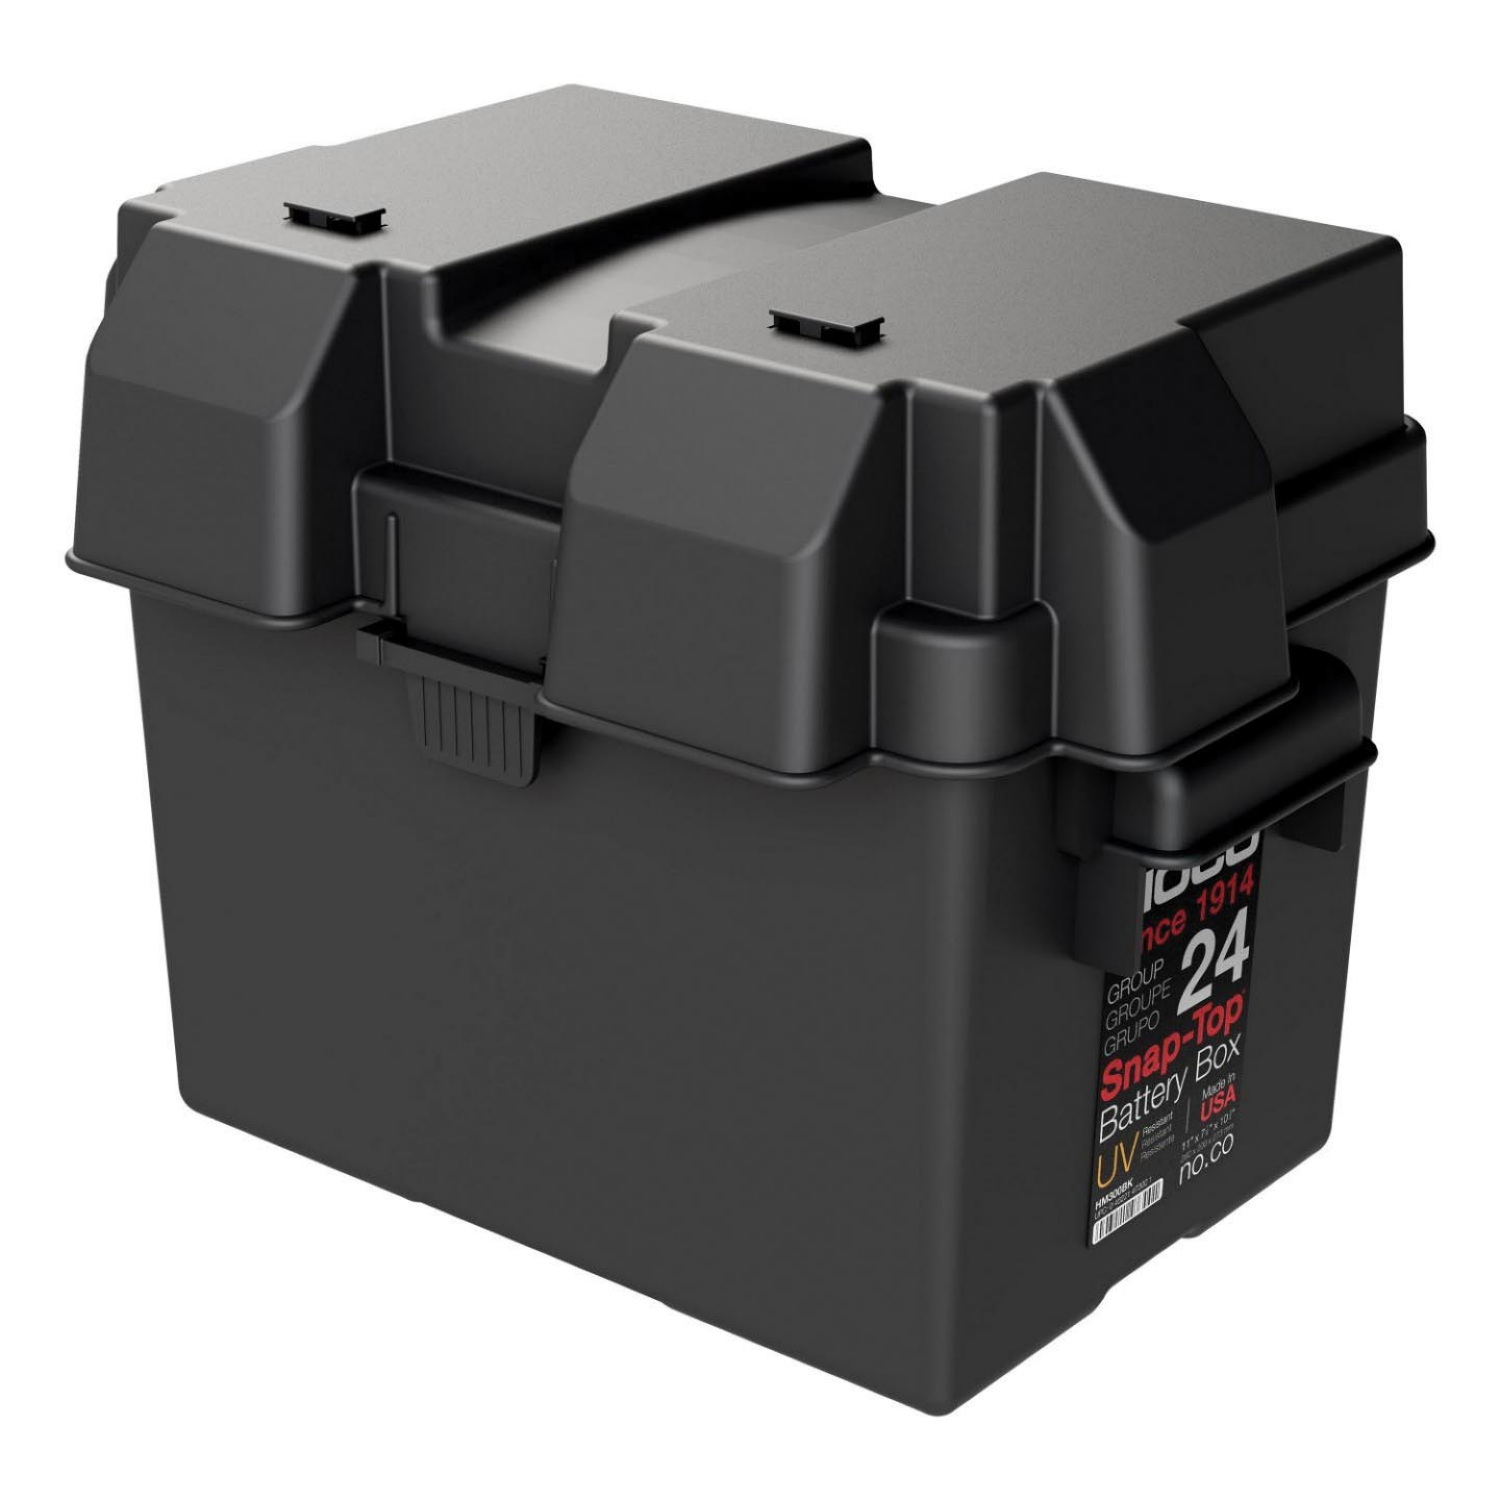 NOCO Accessories HM300BKS Battery Box, 24 Batteries, Snap-Top Locking, Plastic, Black - 2